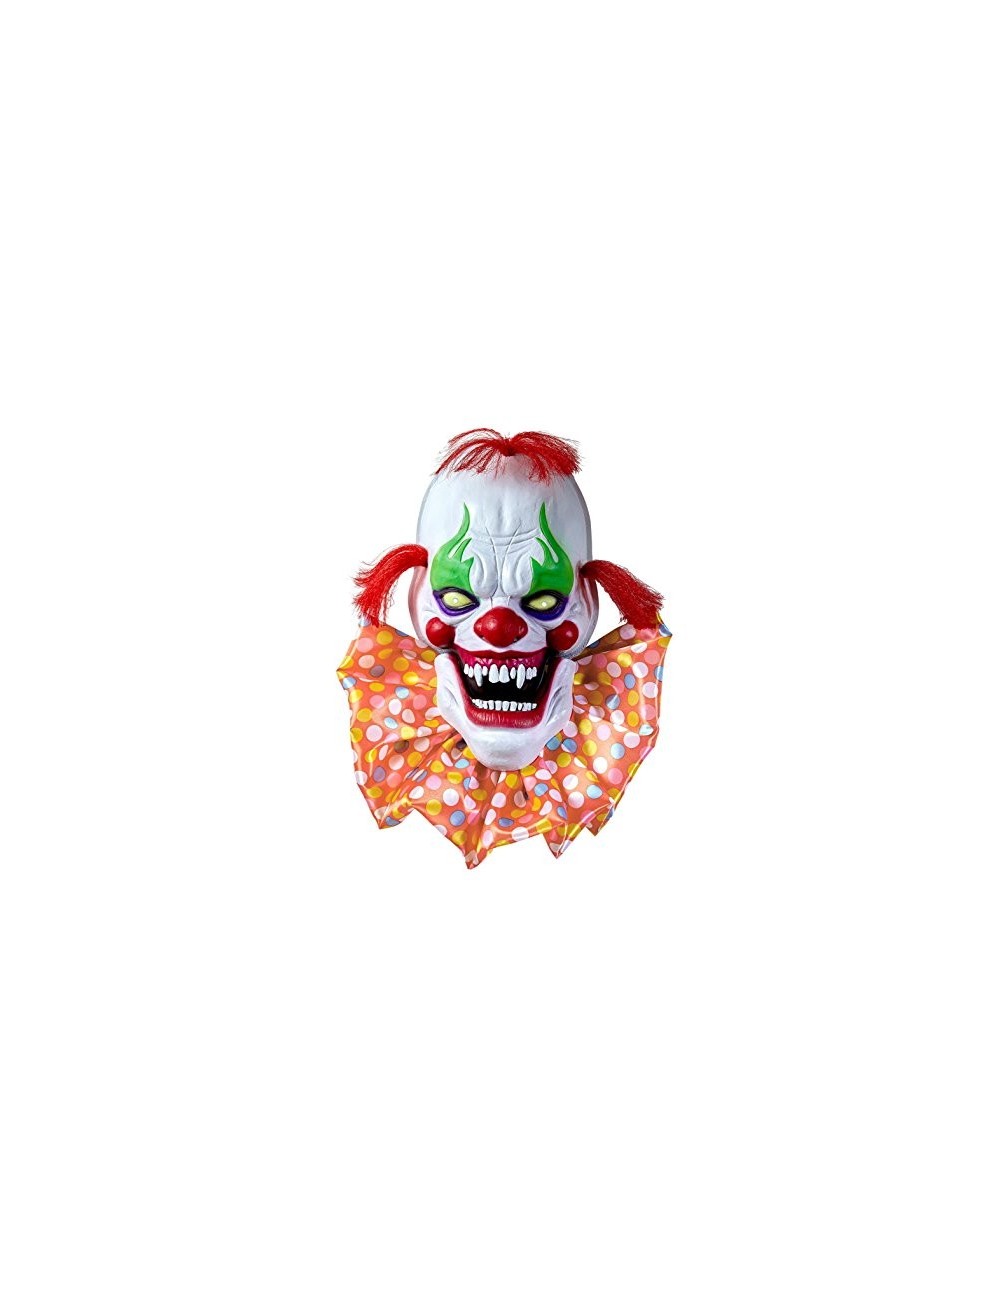 Décoration clown effrayant animé